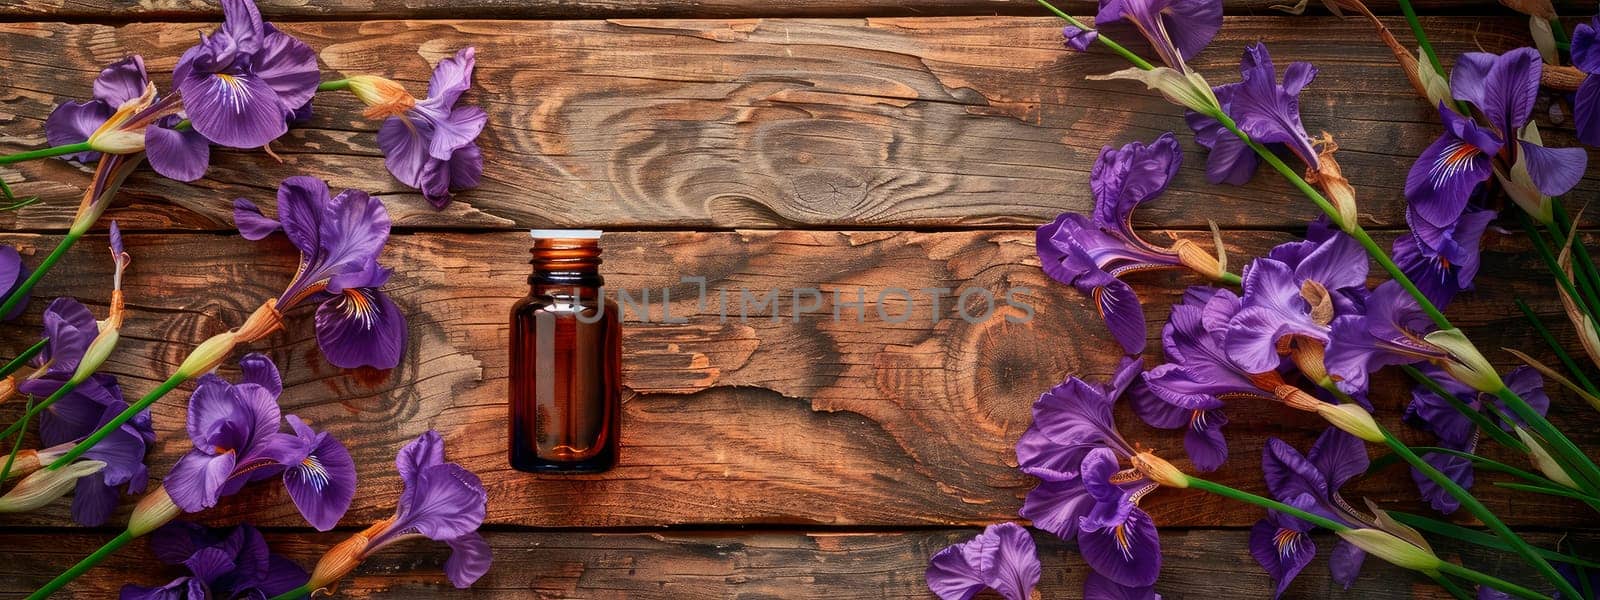 iris essential oil in a bottle. Selective focus. by yanadjana